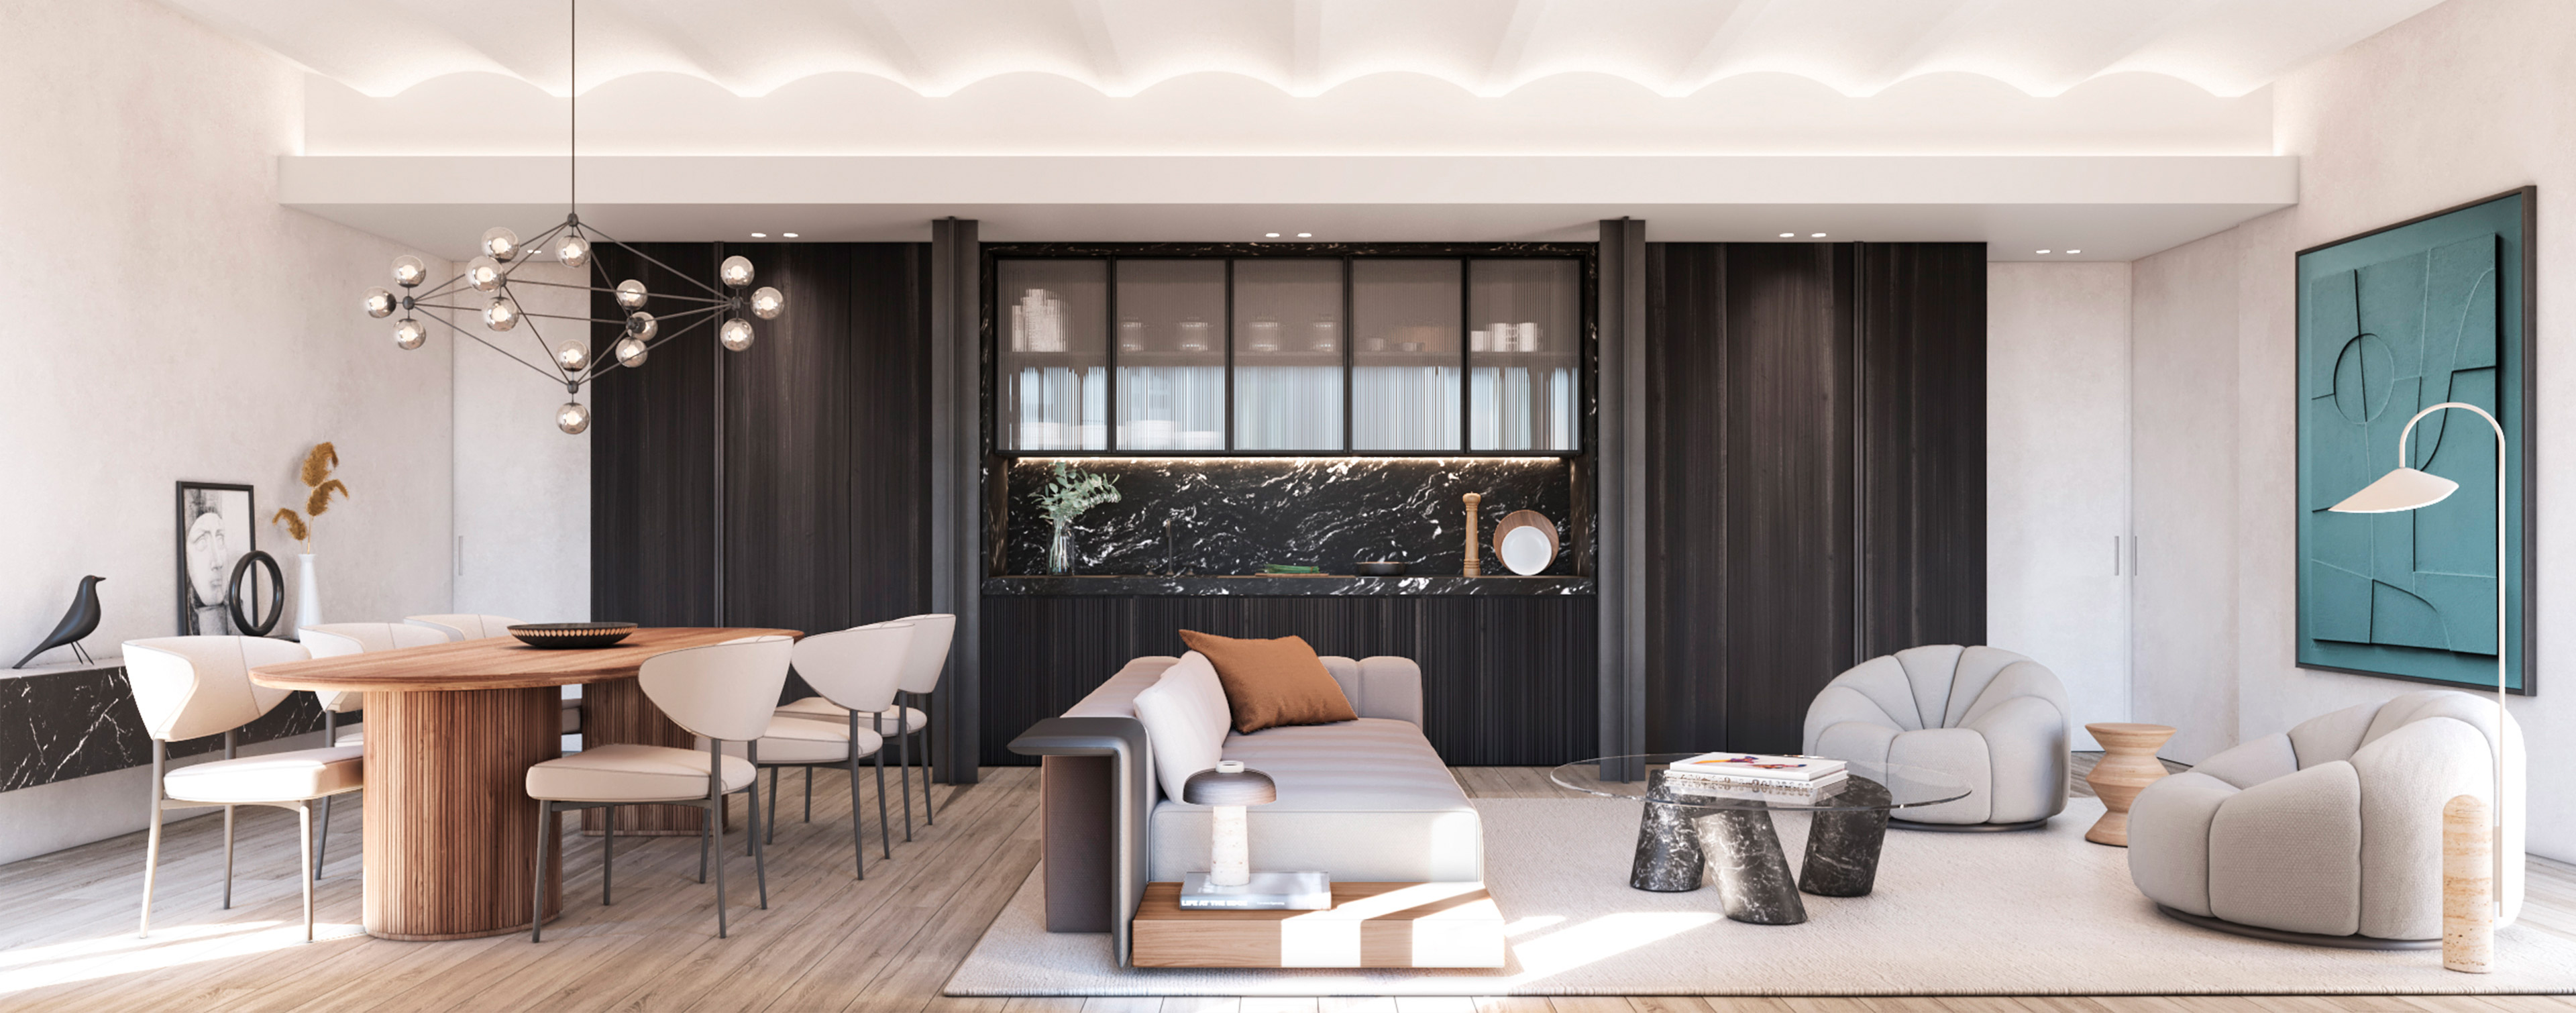 luv studio luxury architects barcelona rambla catalunya apartment IMG 01 - LUV Studio - Arquitectura y diseño - Barcelona